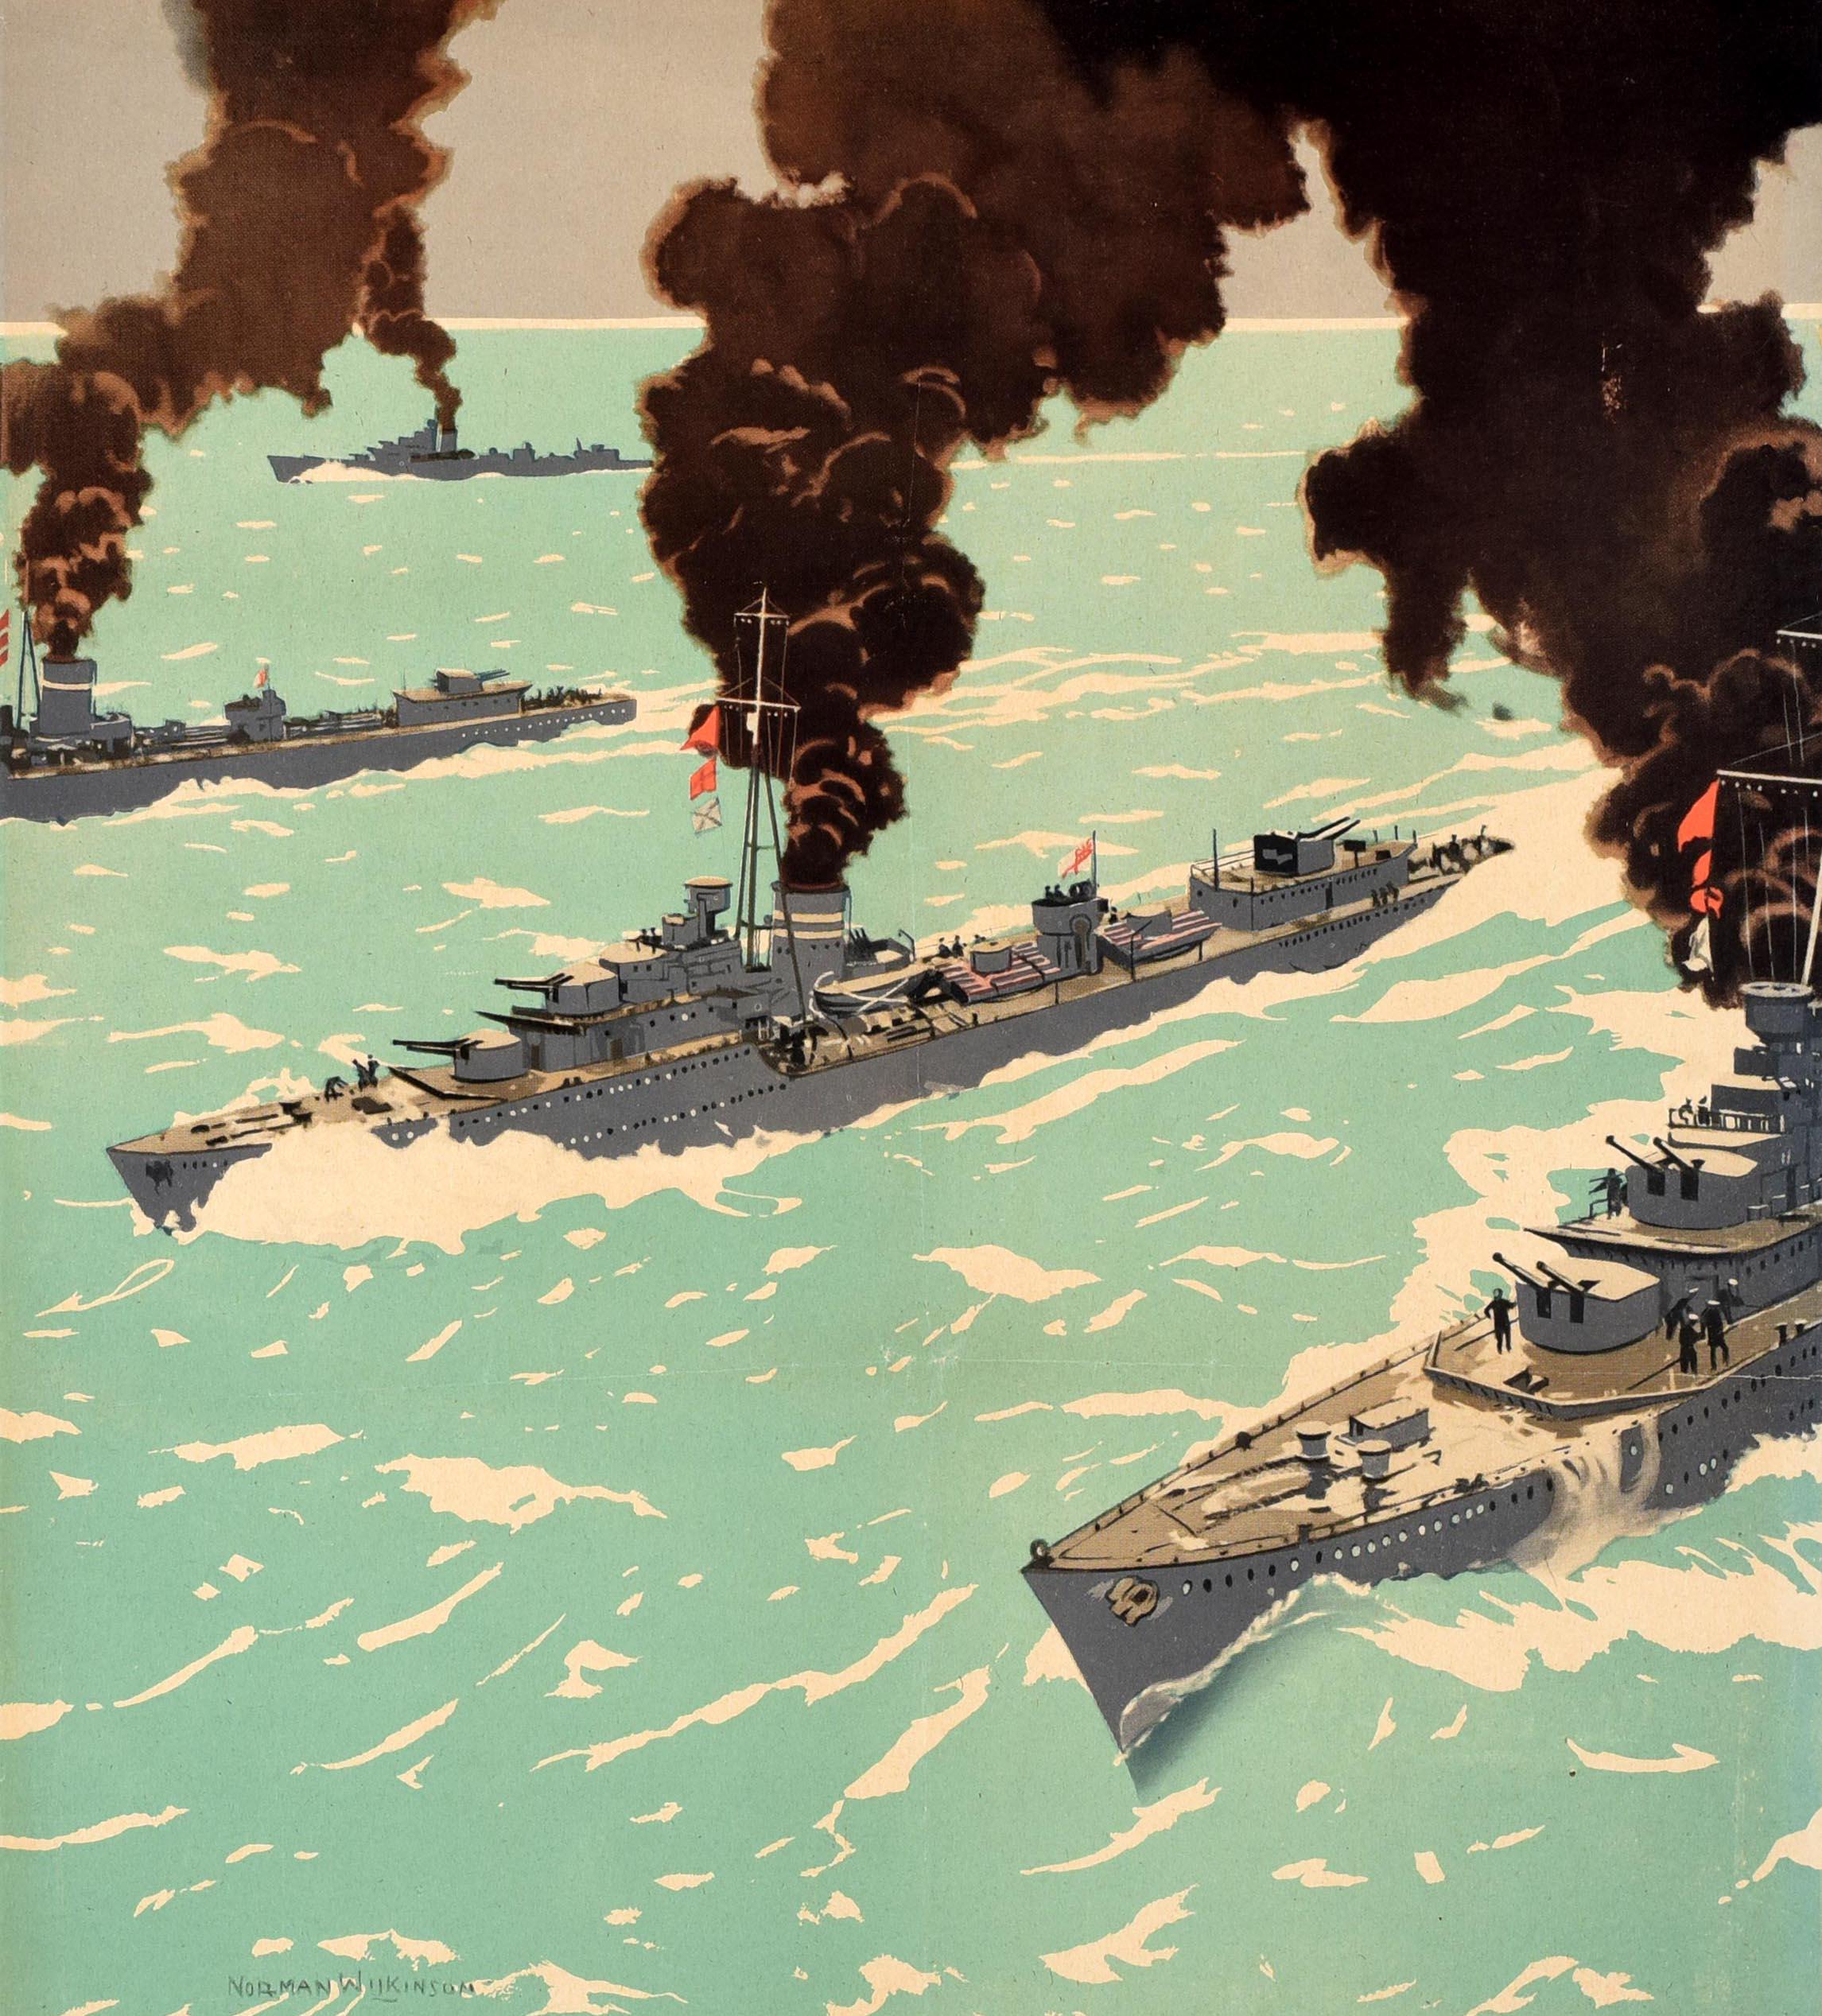 Original Vintage WWII Poster War Savings Are Warships Norman Wilkinson Navy Art - Print de Norman Wilkinson CBE PRI